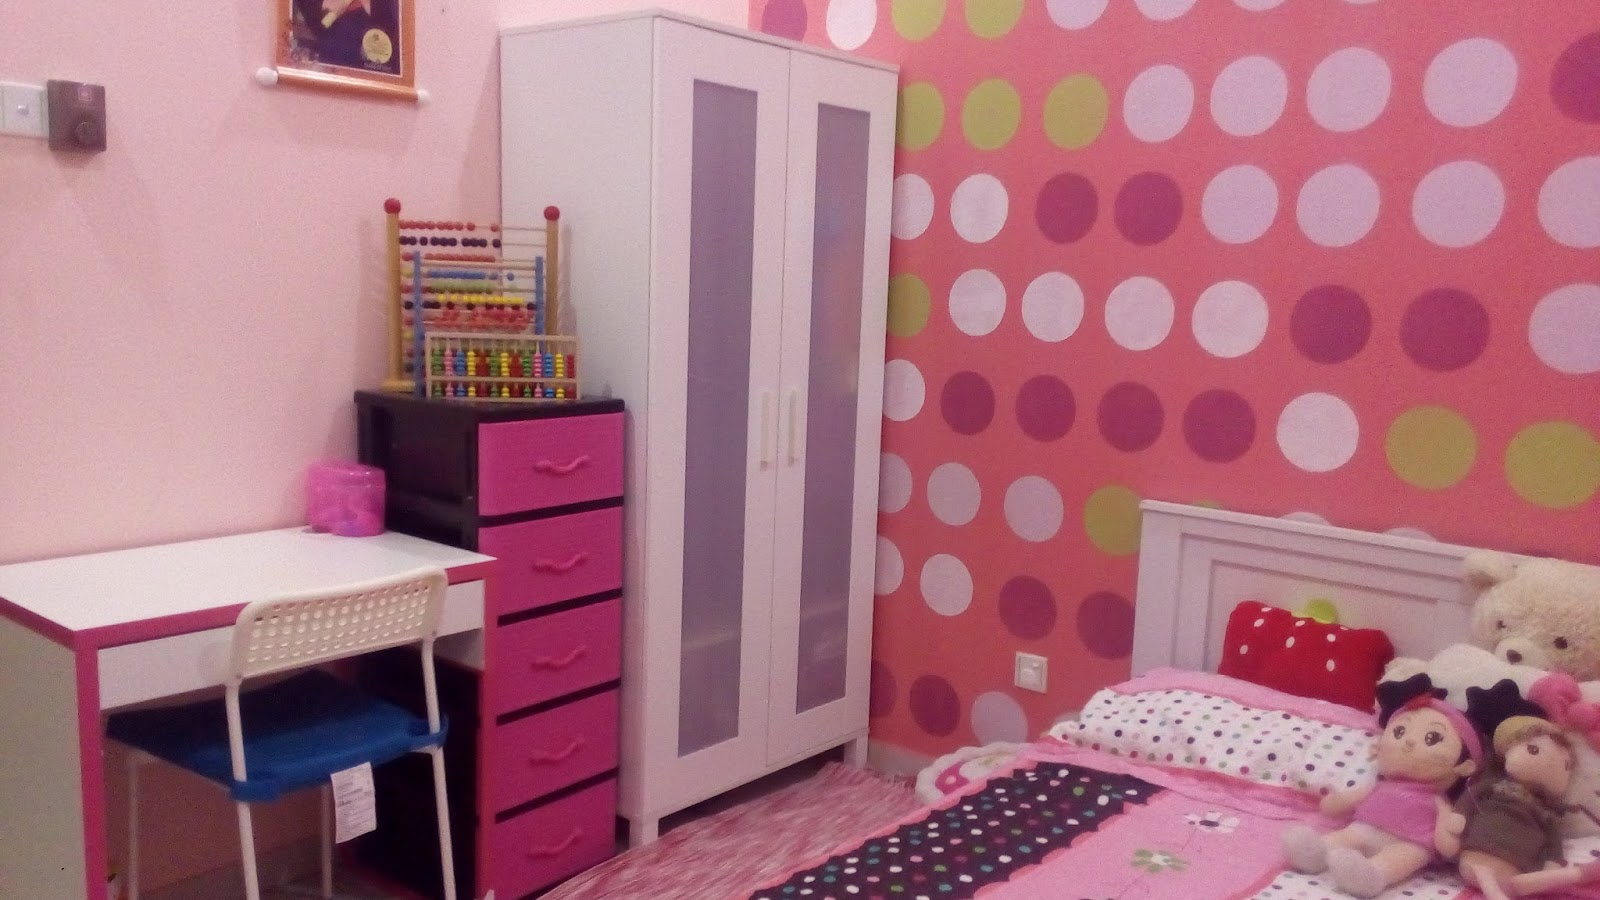 tapete perempuan,schlafzimmer,rosa,zimmer,möbel,bett